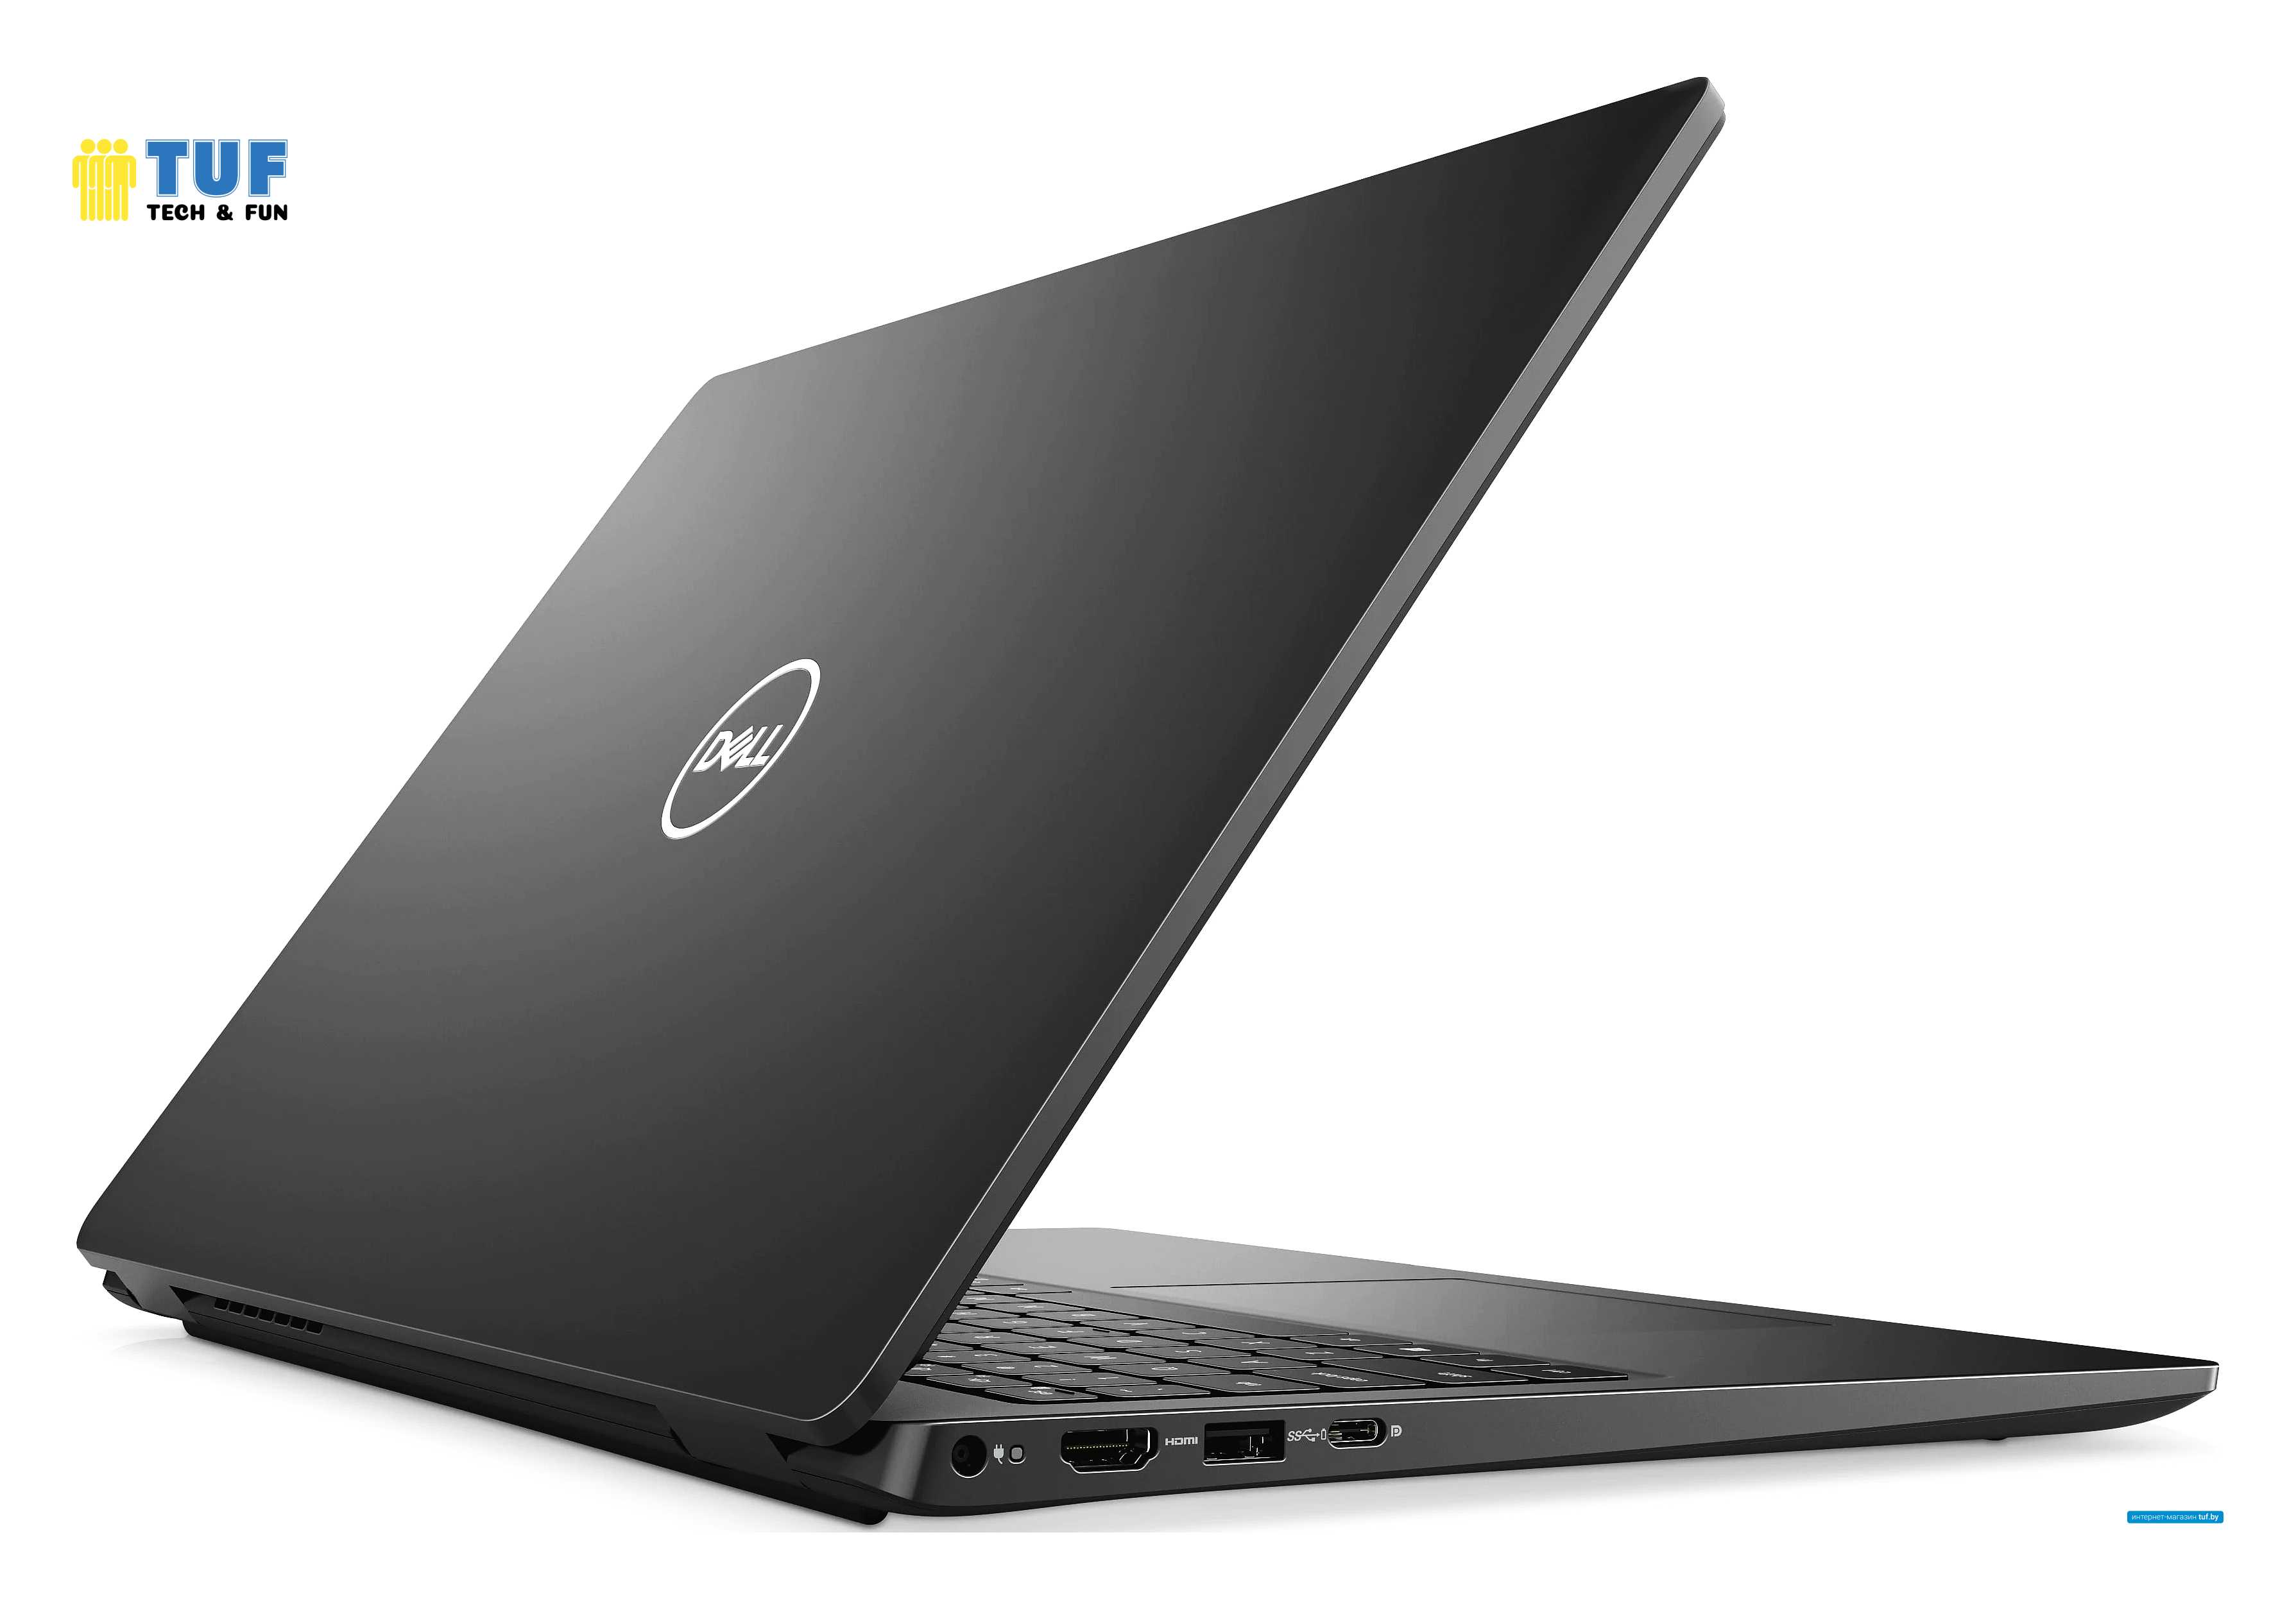 Ноутбук Dell Latitude 15 3520-2361